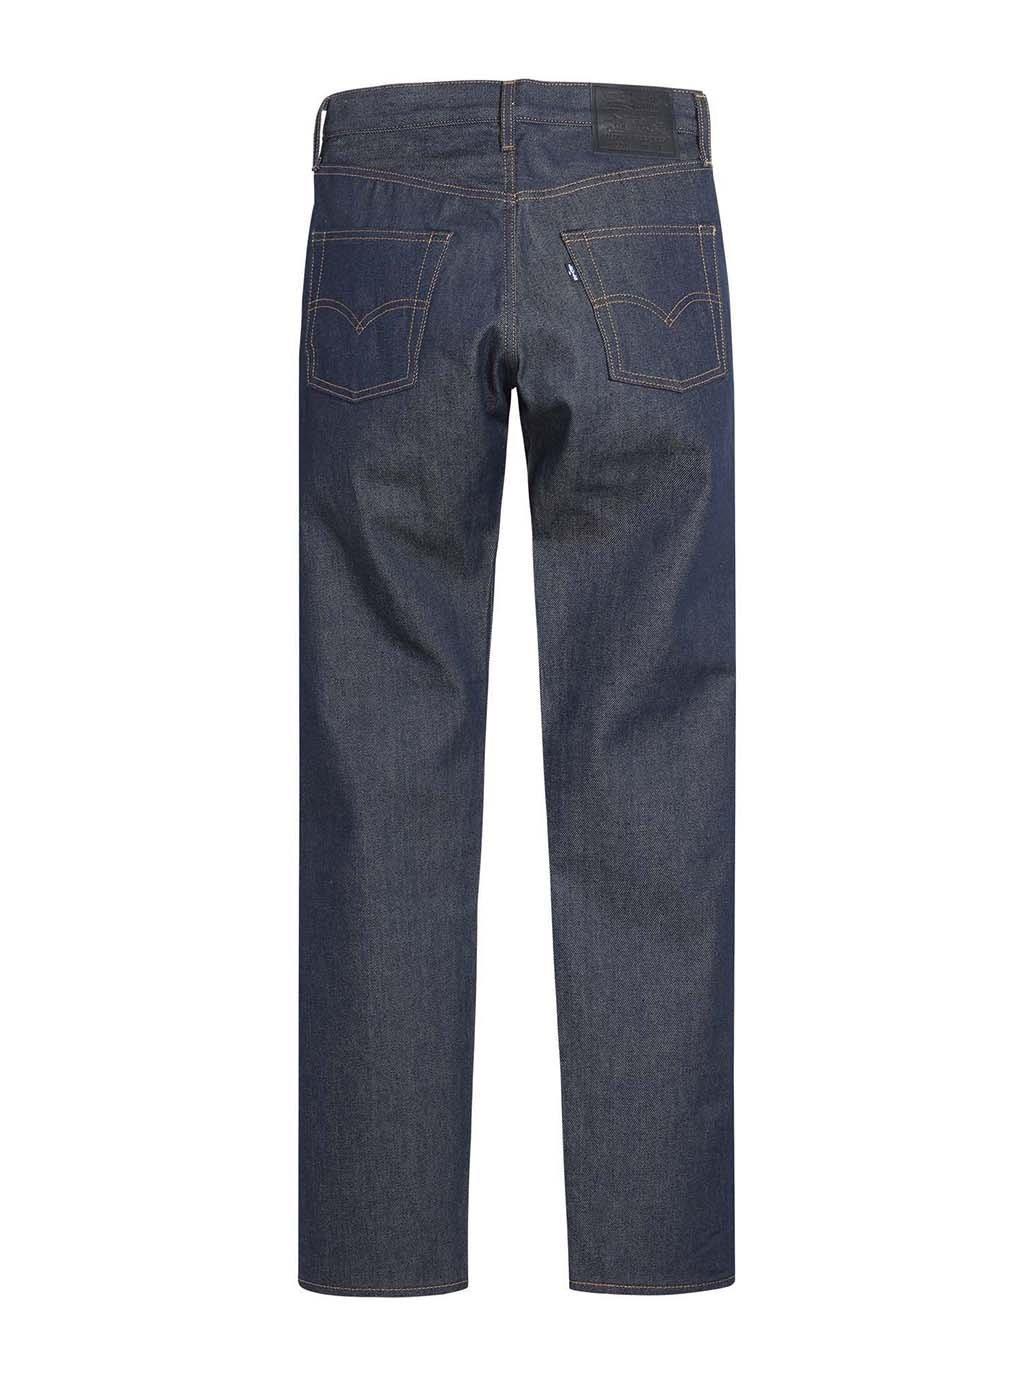 Levi's 1944 501 Original Fit Men's Jeans - Rigid 28 x 34